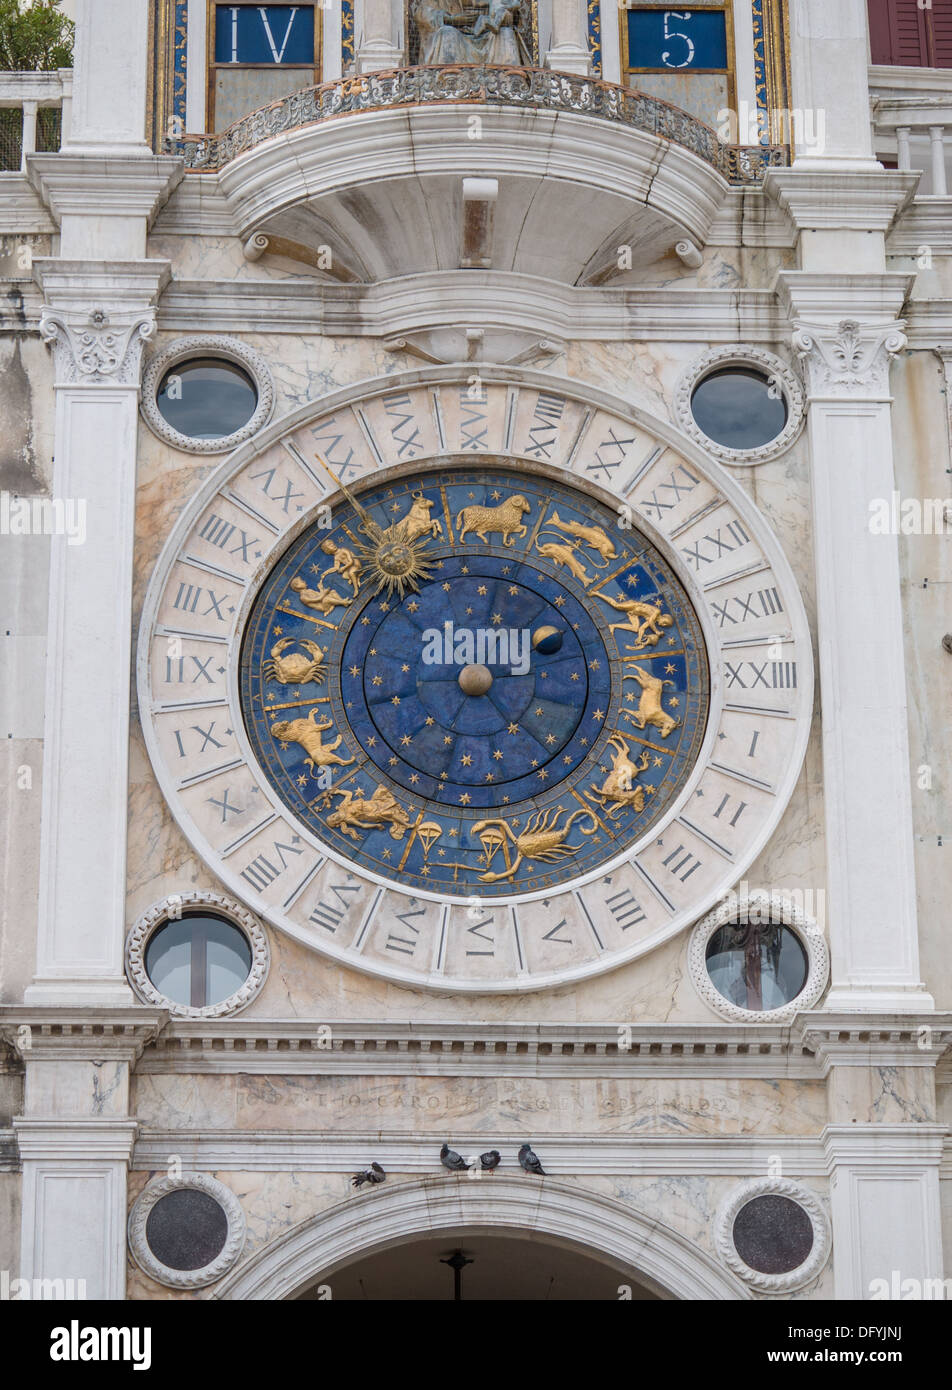 Astrological zodiac clock at St Marks Square in Venice Stock Photo